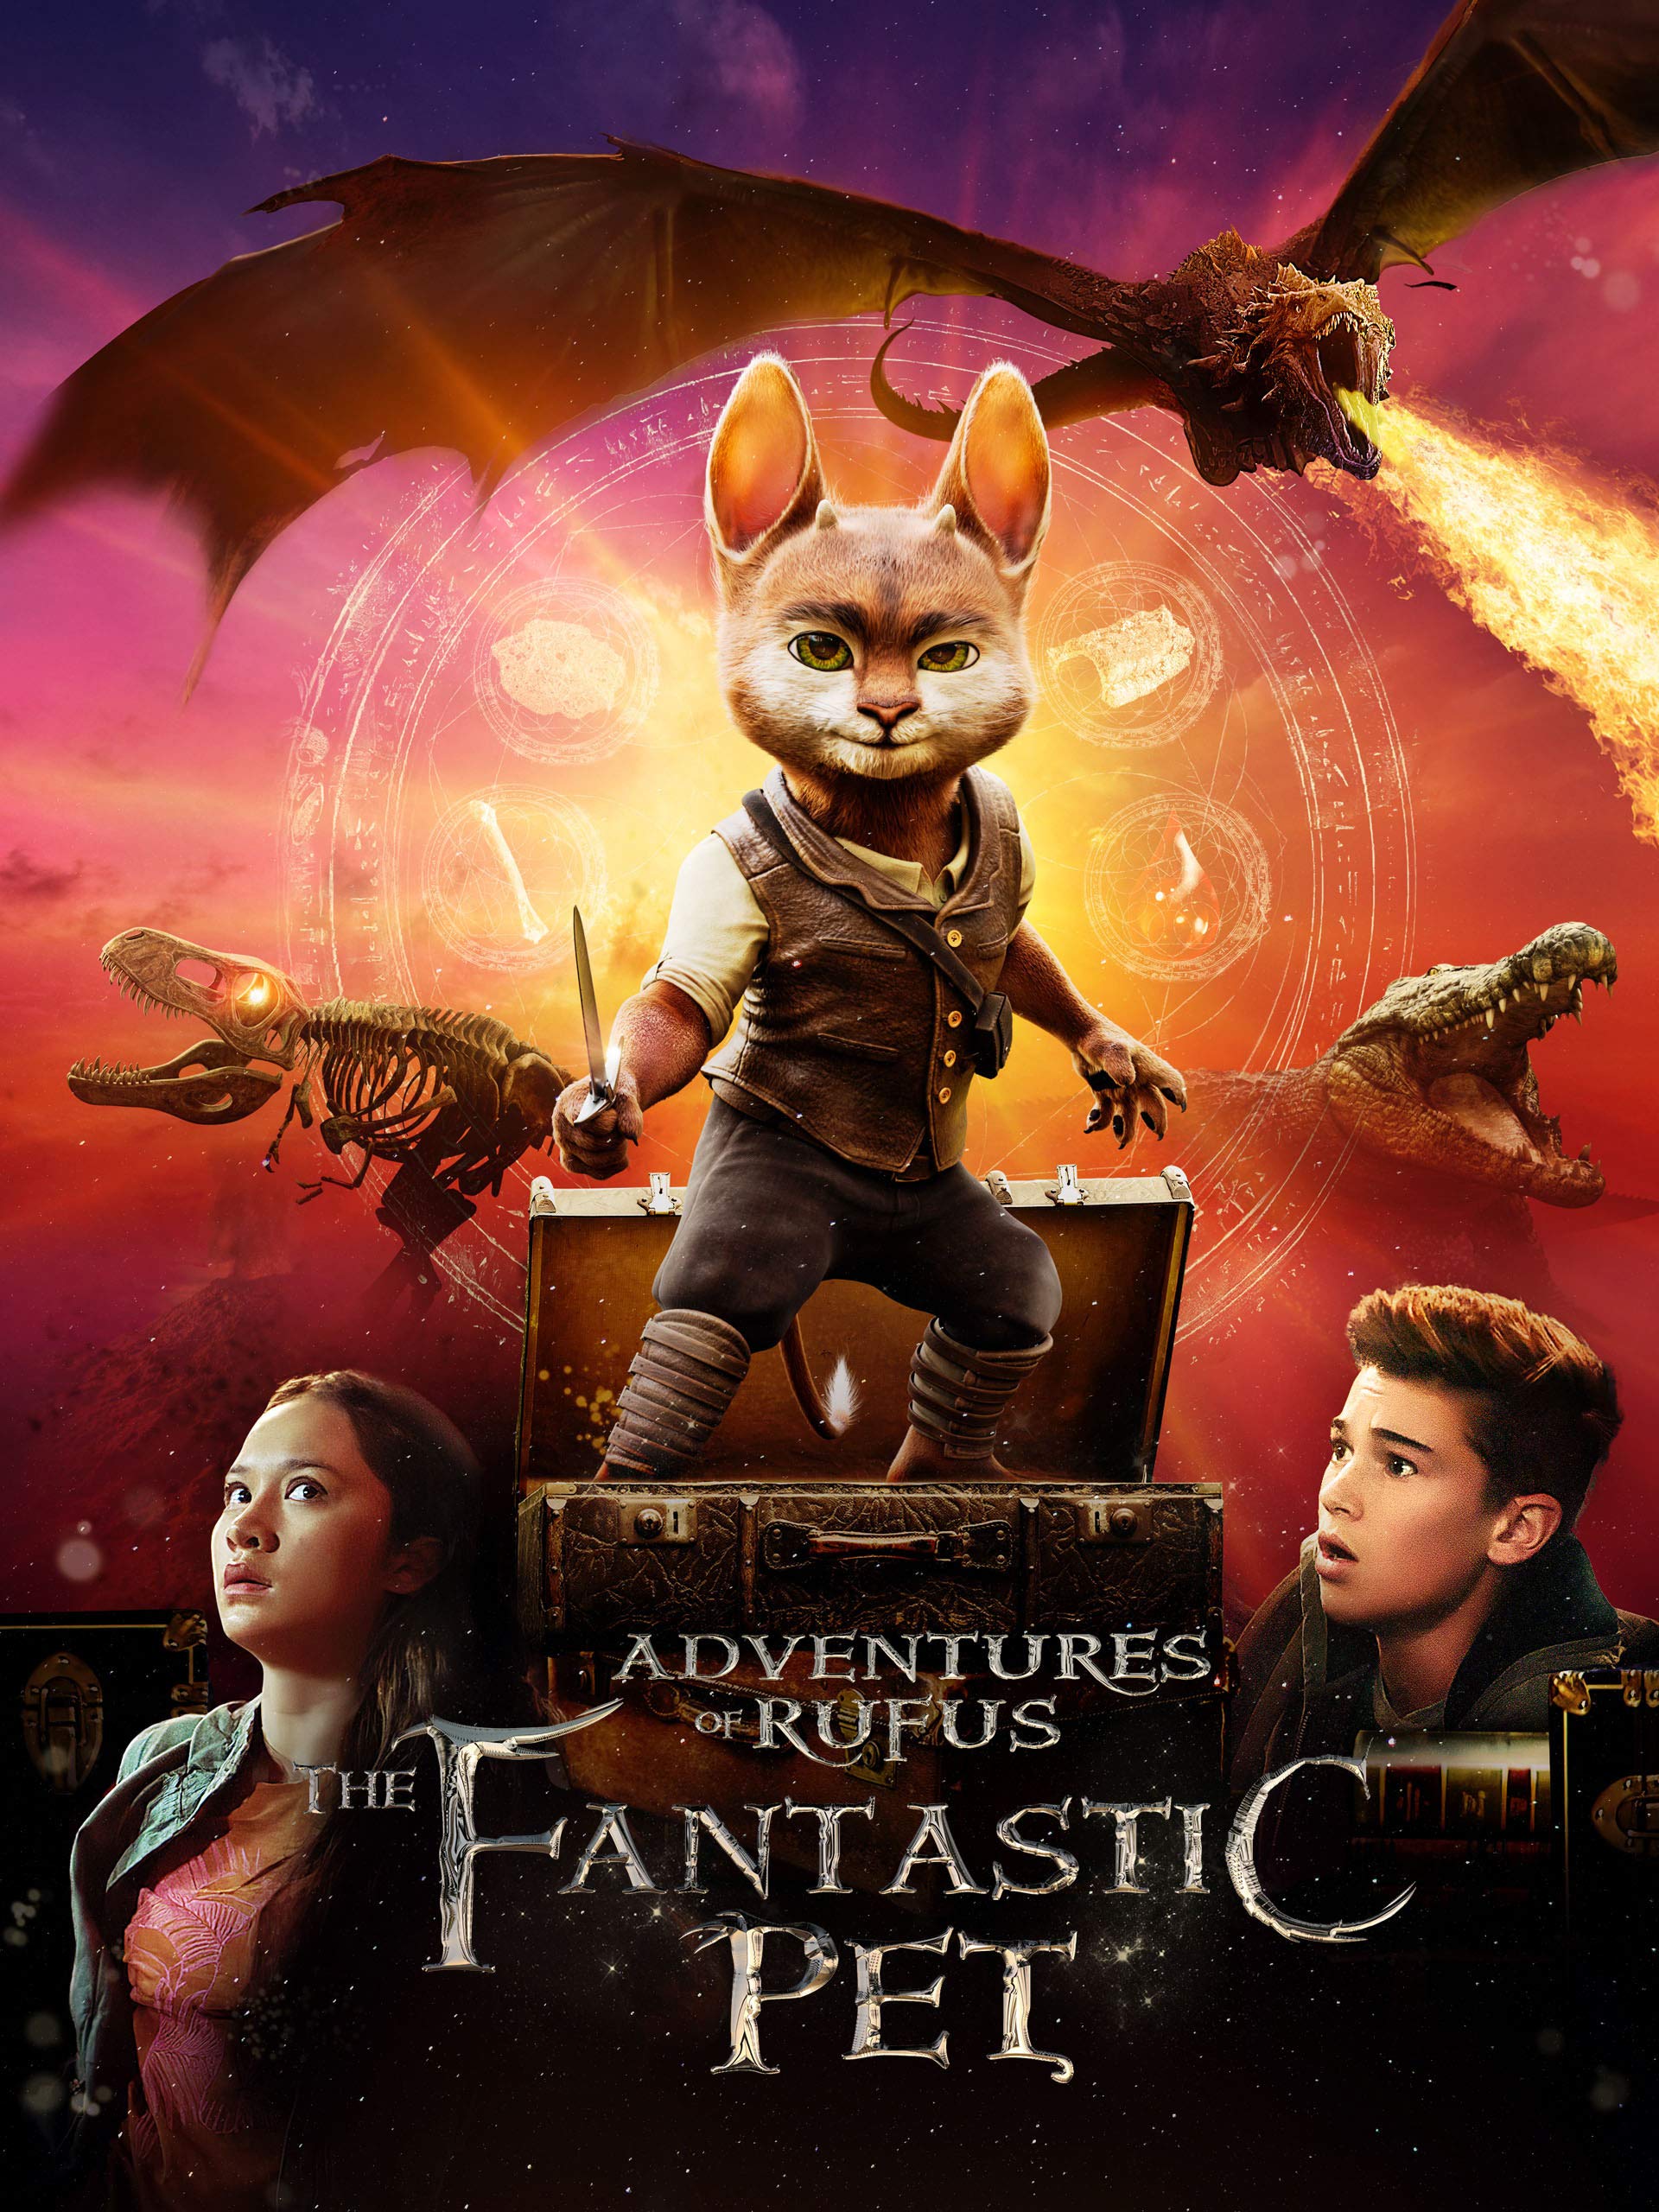 Stiahni si Filmy CZ/SK dabing Rufusova Dobrodruzstvi: The Fantastic Pet / Adventures of Rufus: The Fantastic Pet (2020)[WebRip][1080p] CZ = CSFD 43%